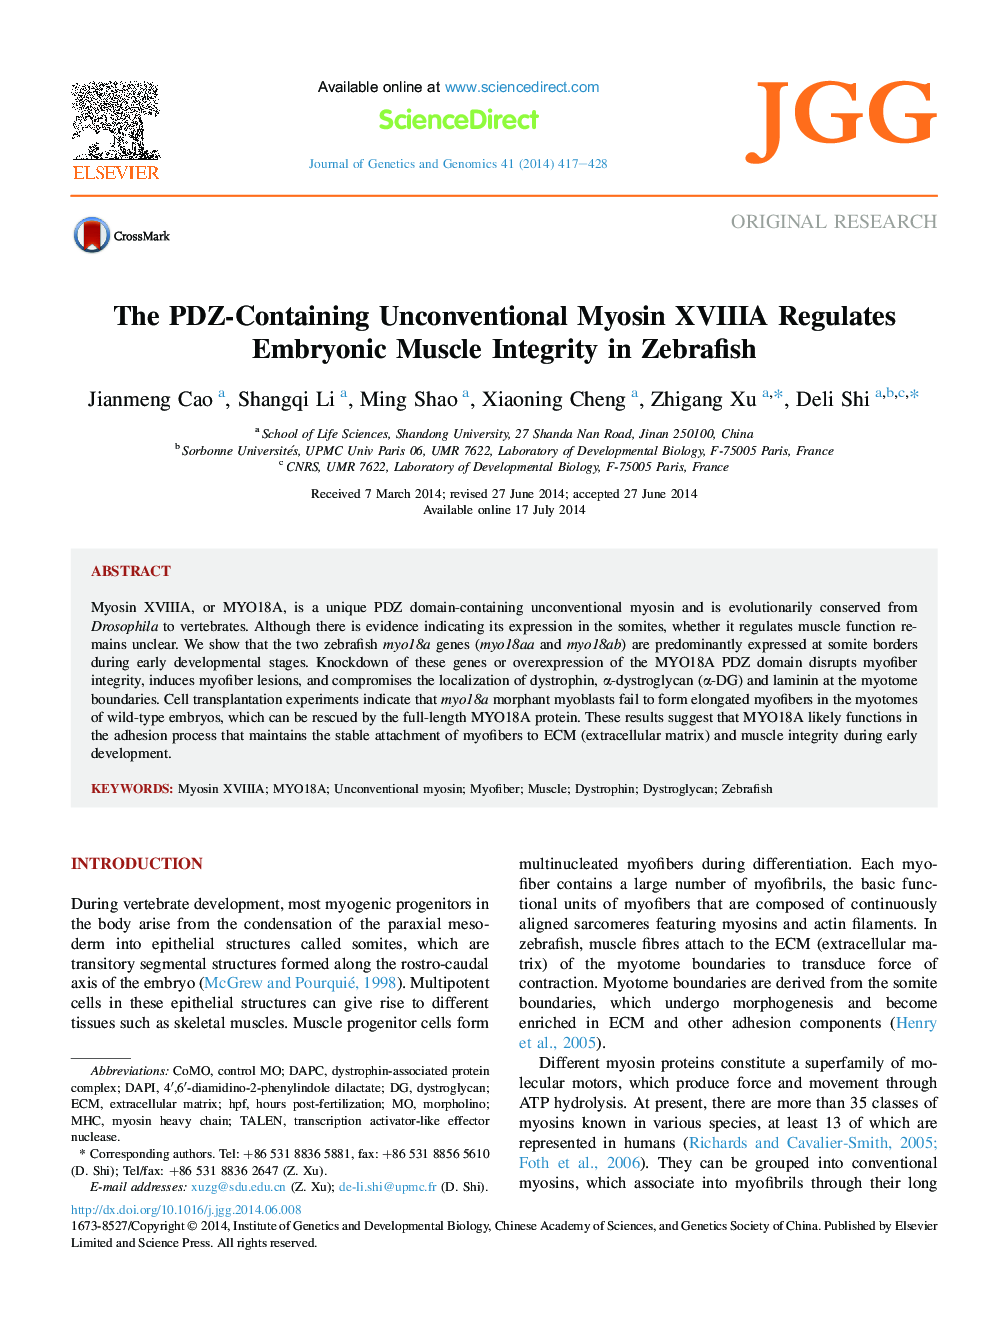 The PDZ-Containing Unconventional Myosin XVIIIA Regulates Embryonic Muscle Integrity in Zebrafish